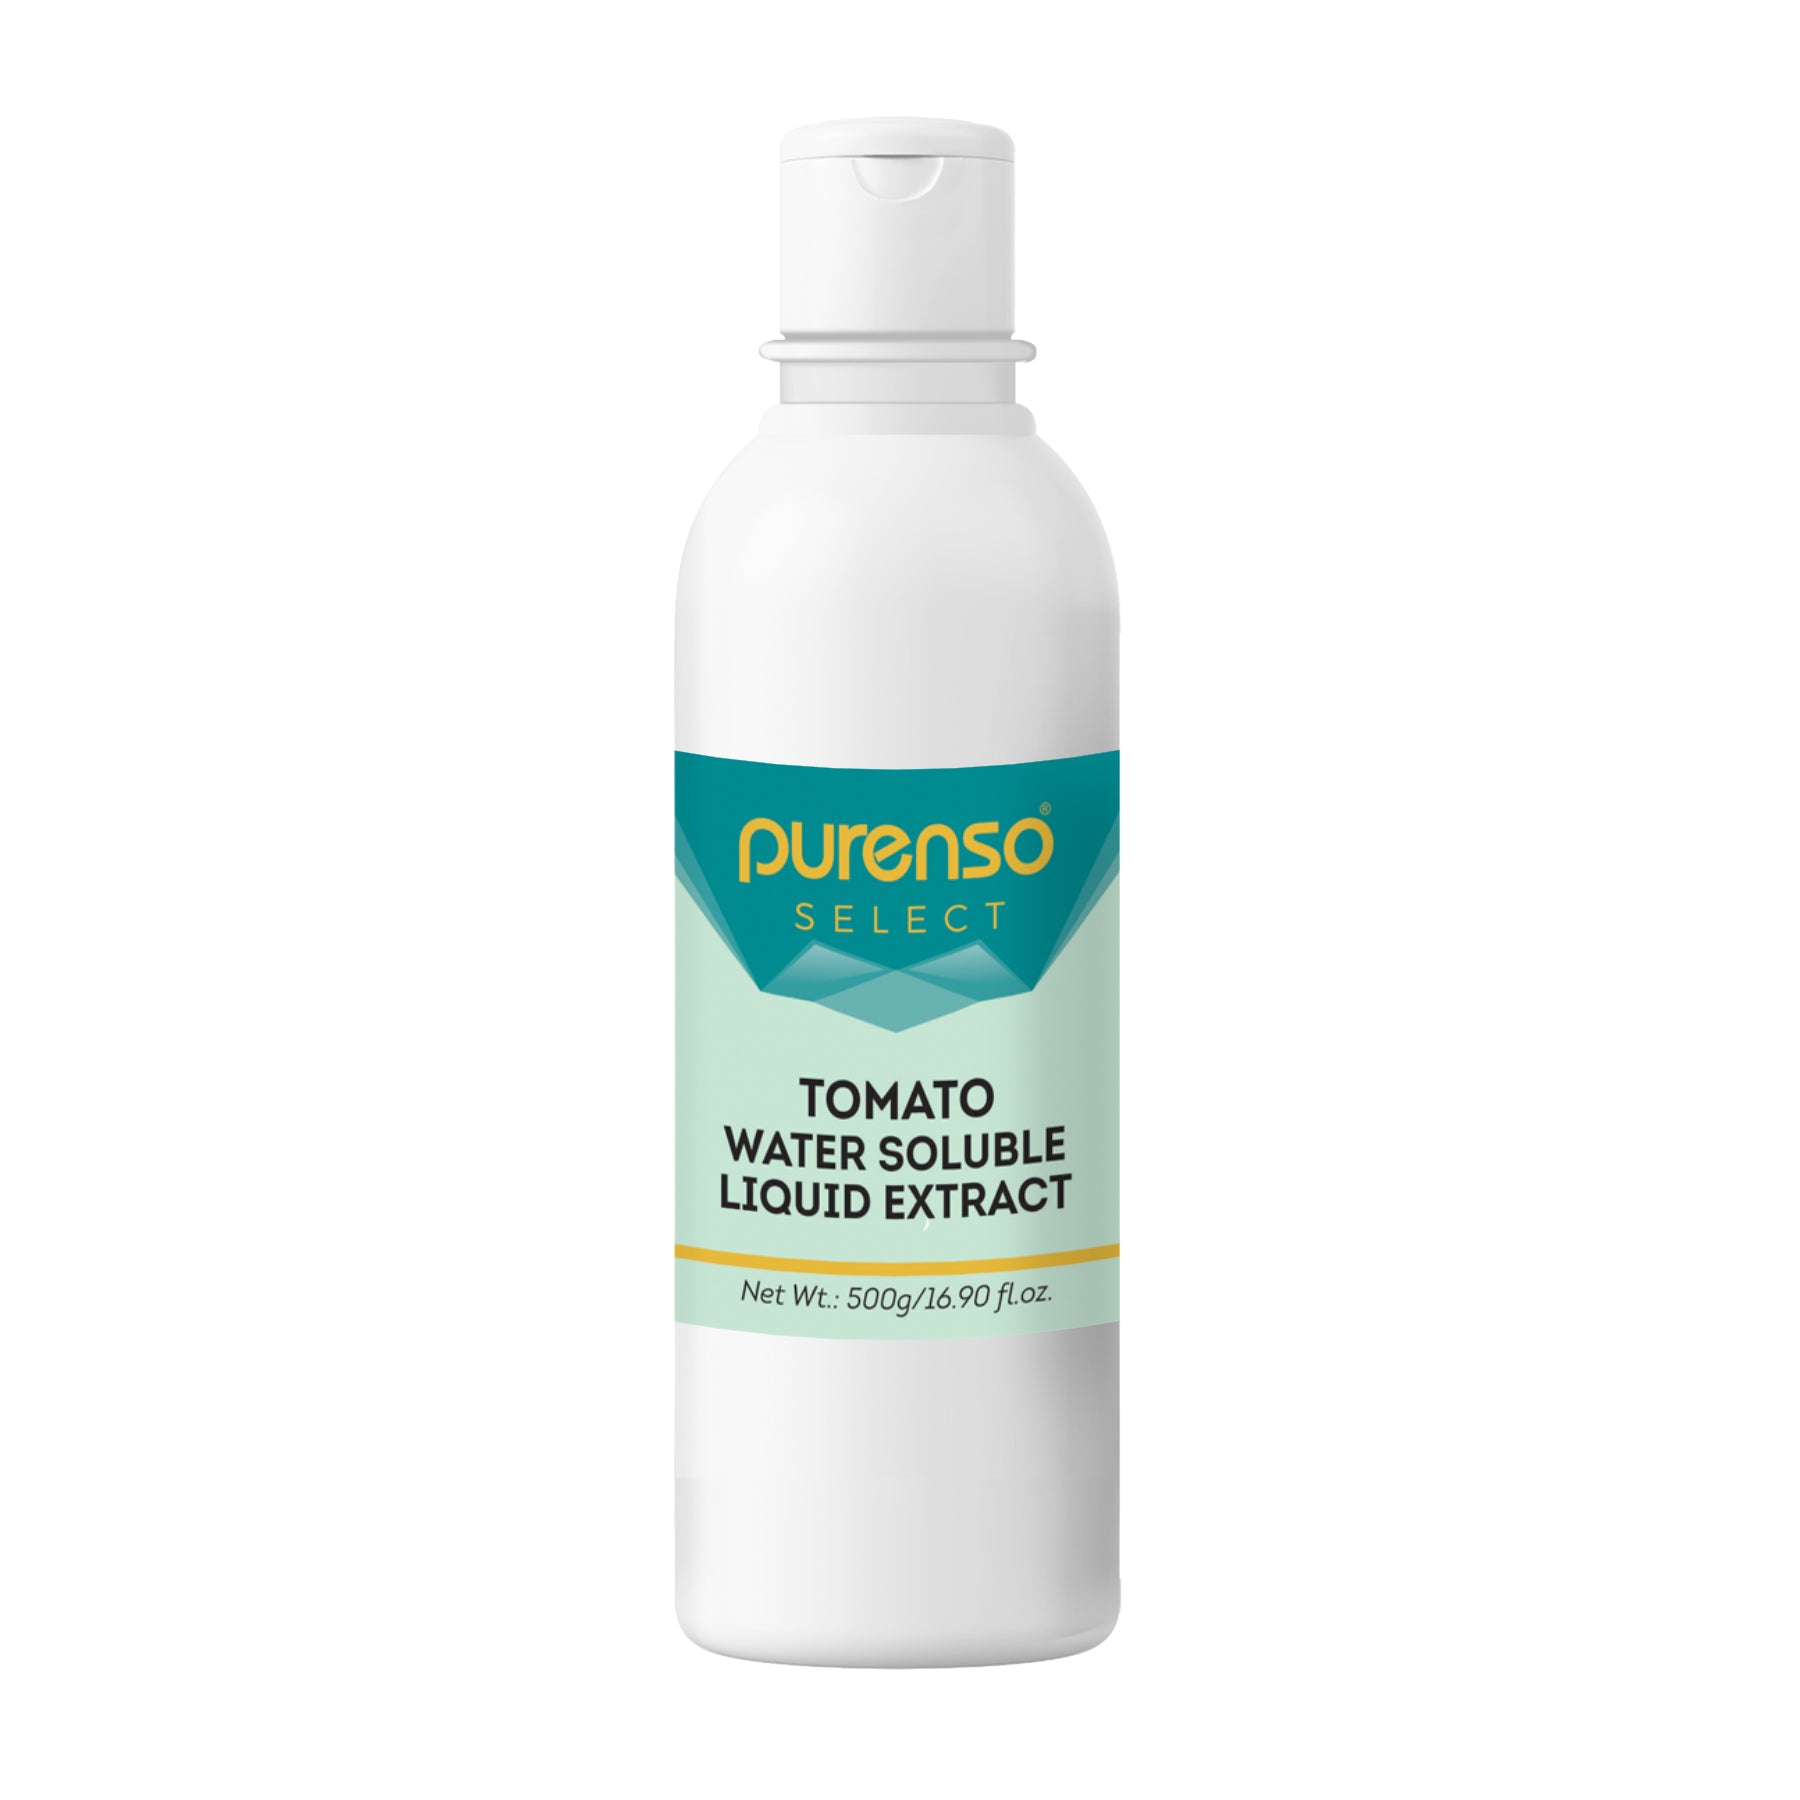 Tomato Liquid Extract - Water Soluble